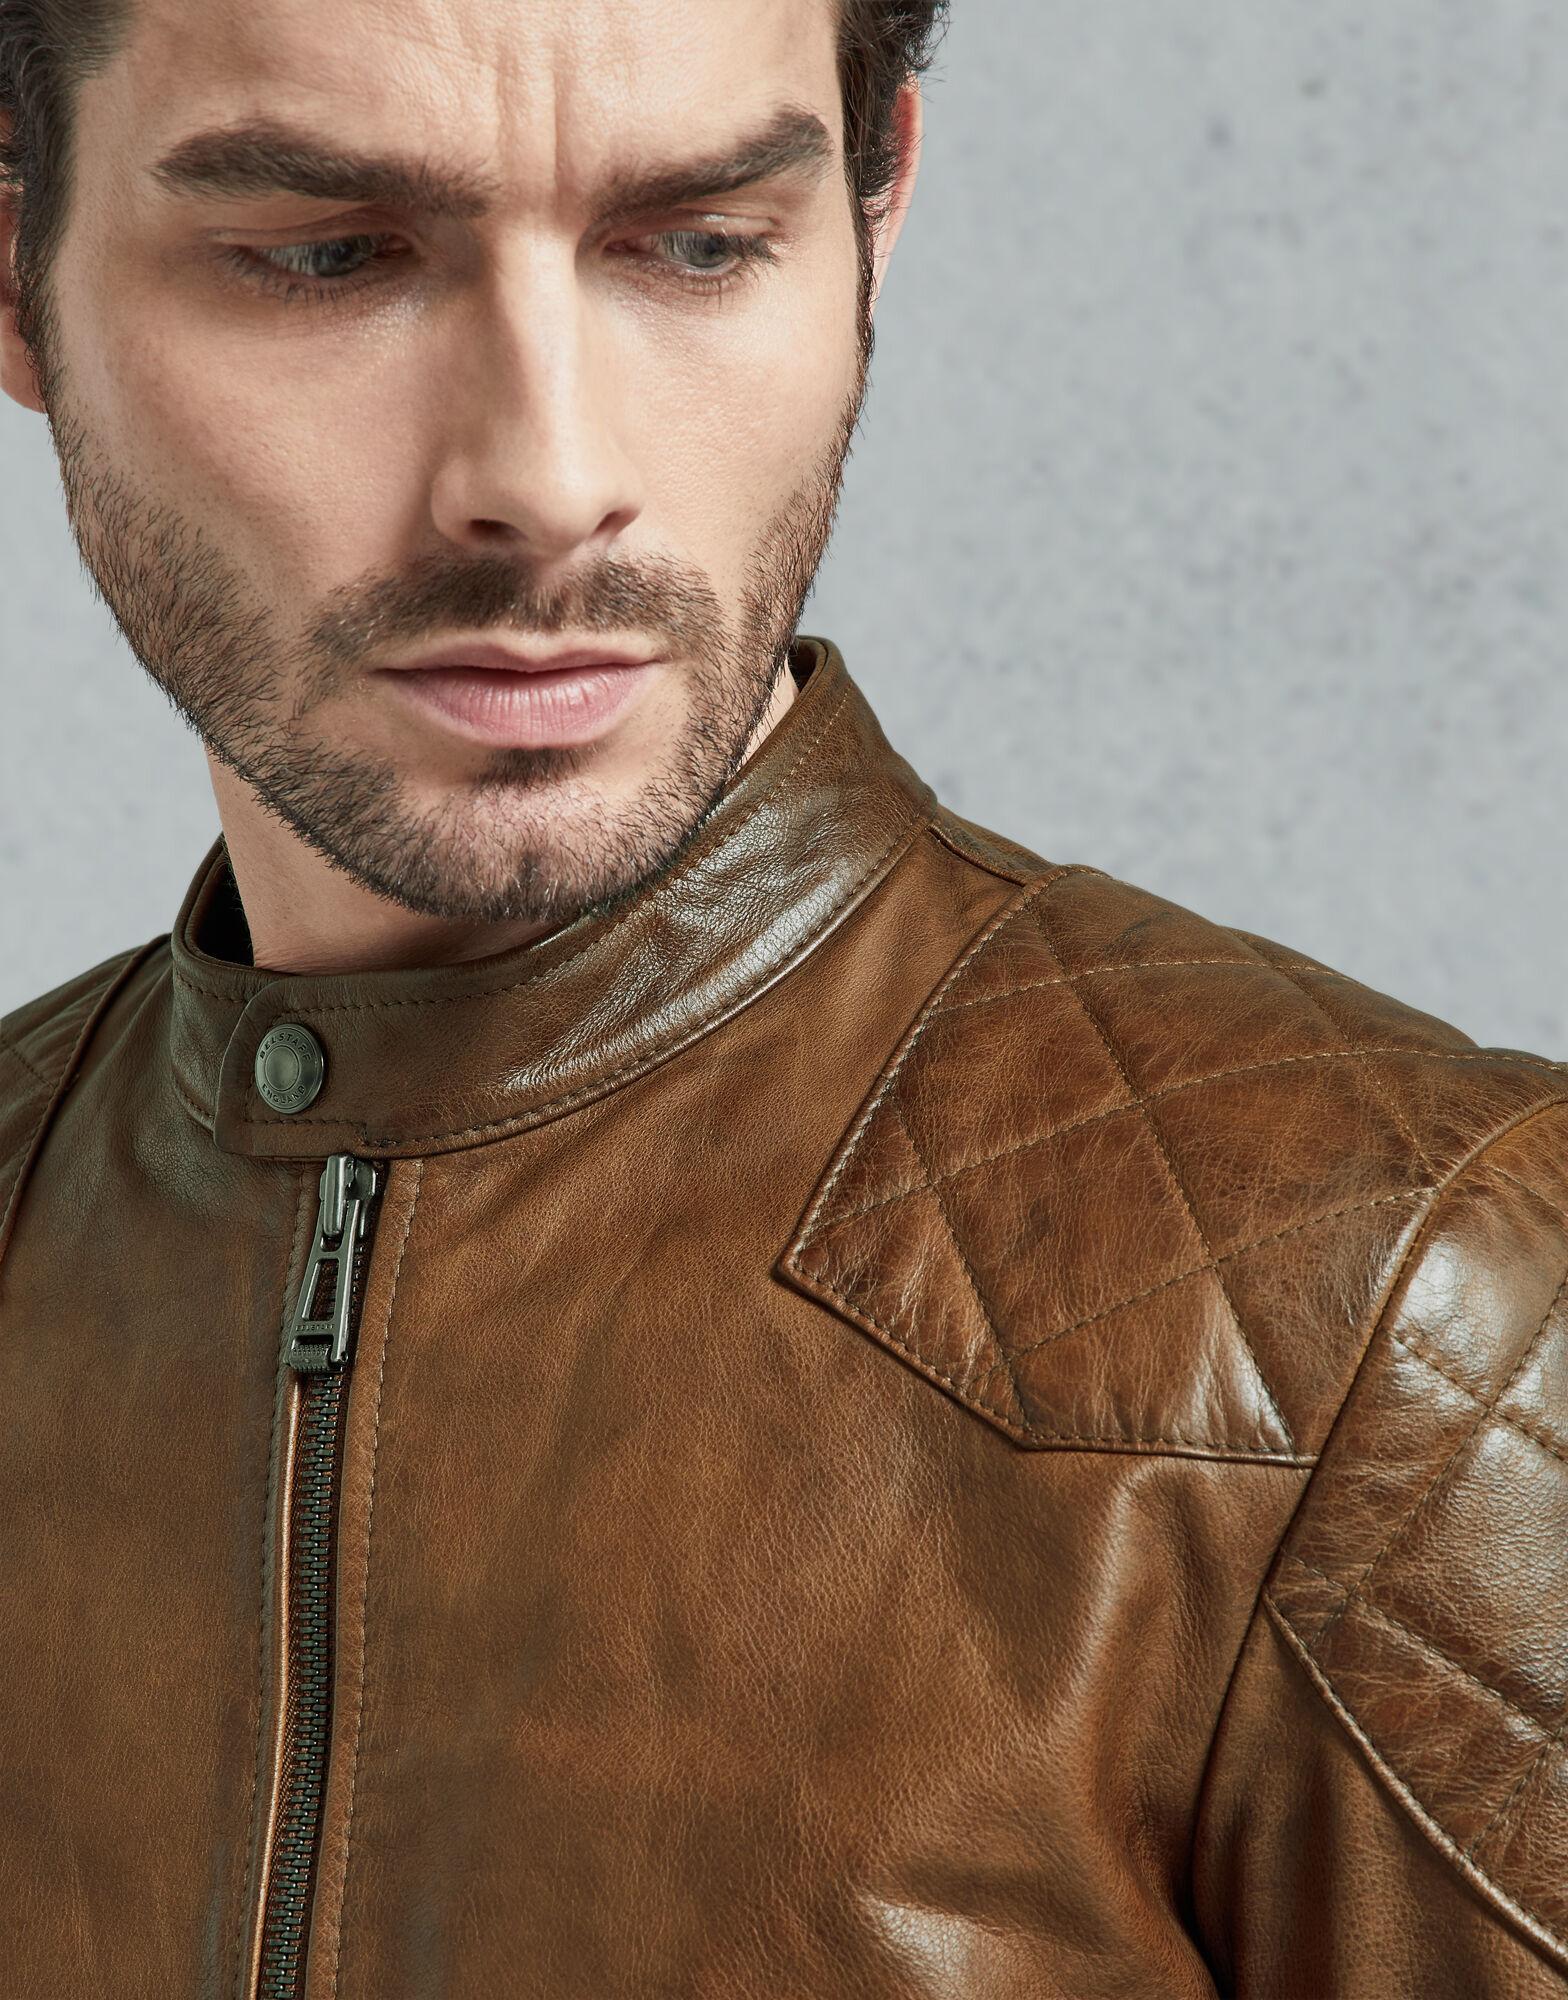 Belstaff Outlaw Leather Jacket in Cognac (Brown) for Men - Lyst